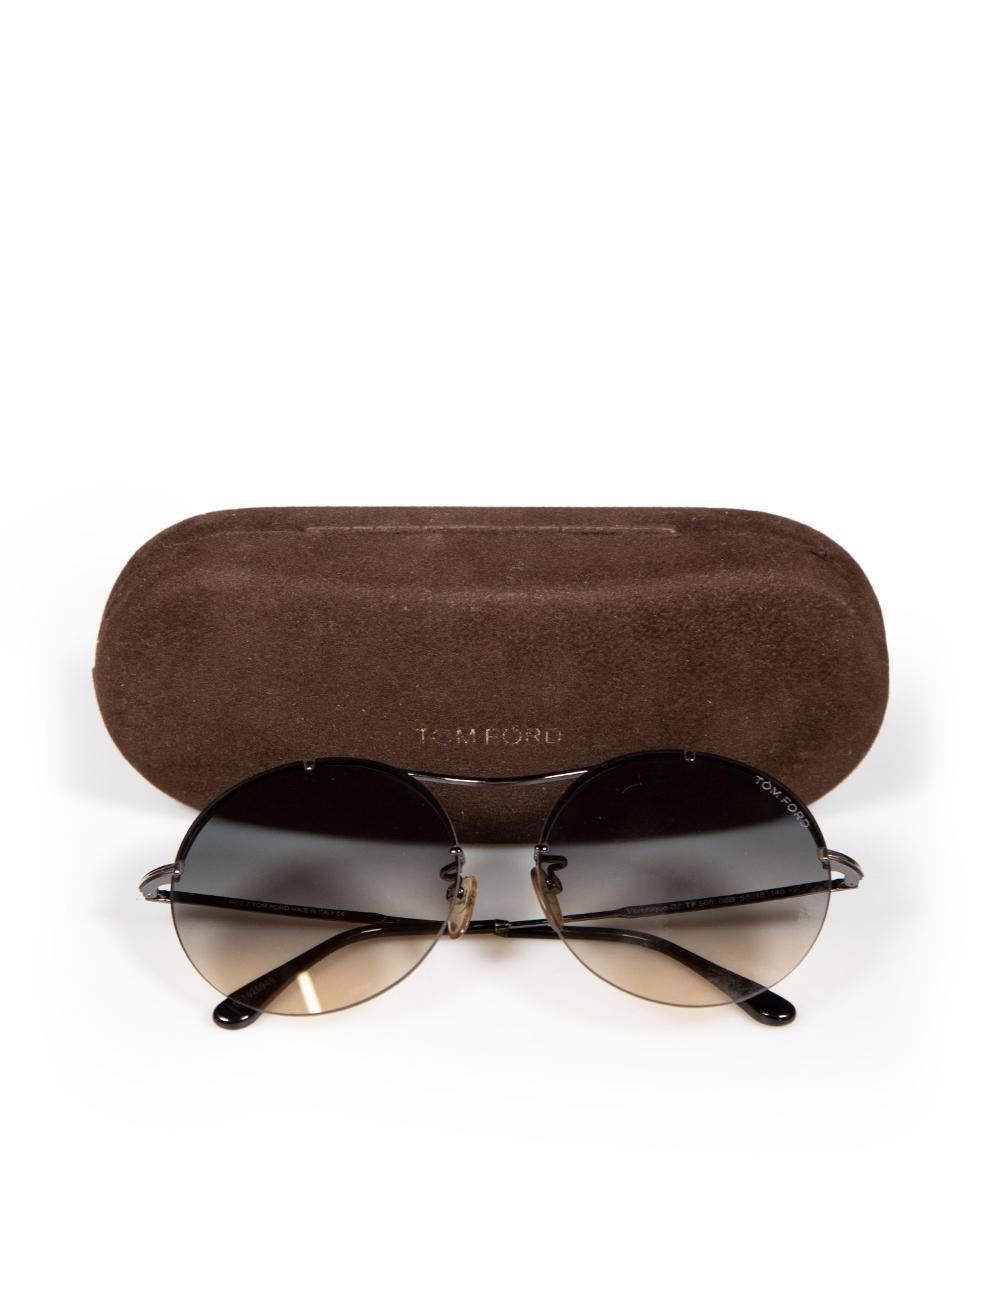 Tom Ford Black Veronique Round Frame Sunglasses For Sale 1